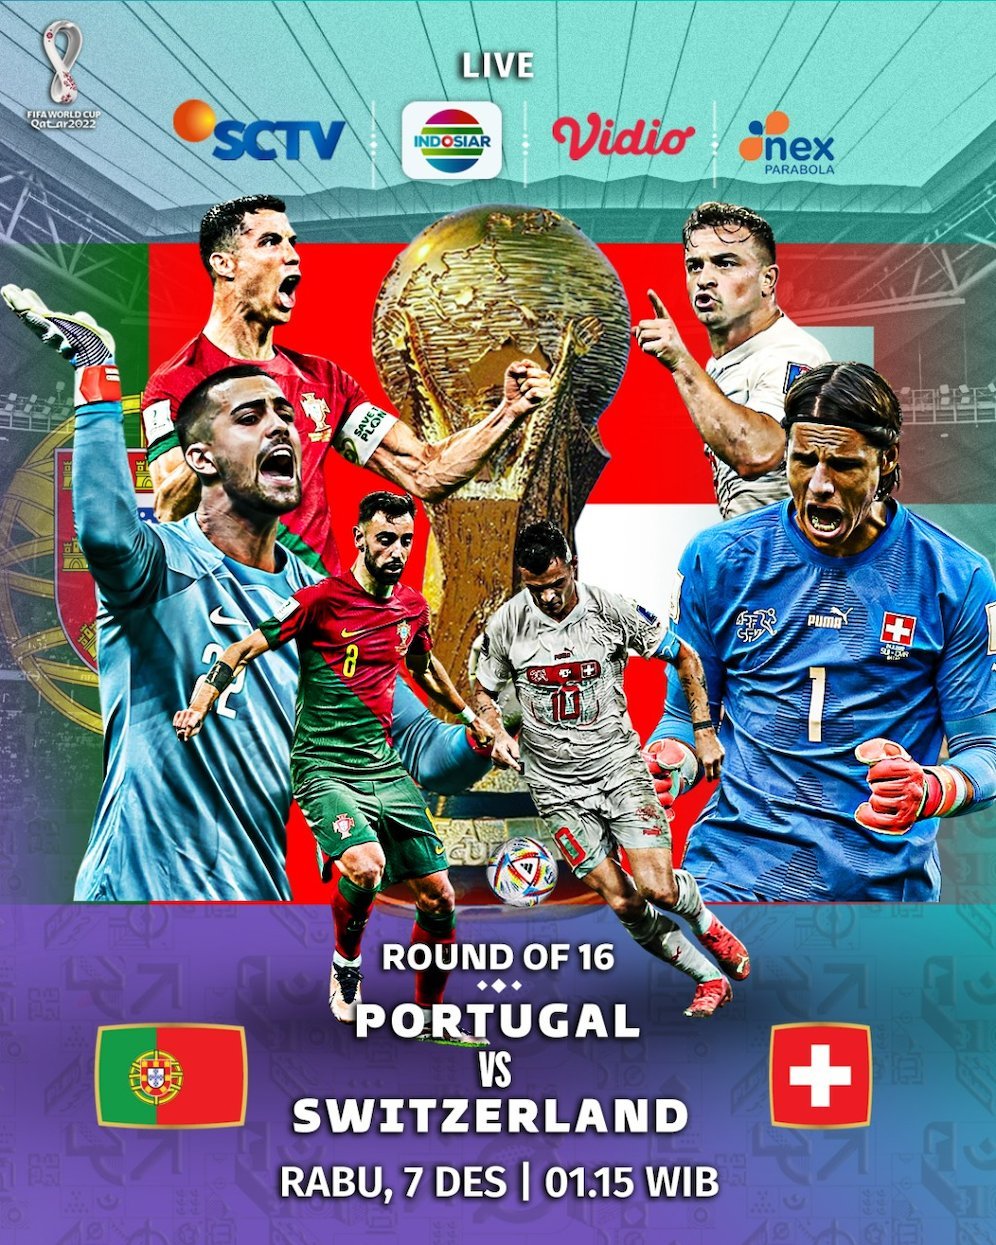 Pertandingan 16 Besar Piala Dunia 2022 Portugal vs Siwss ditayangkan SCTV, Indosiar, Vidio, Nex Parabola (c) SCM